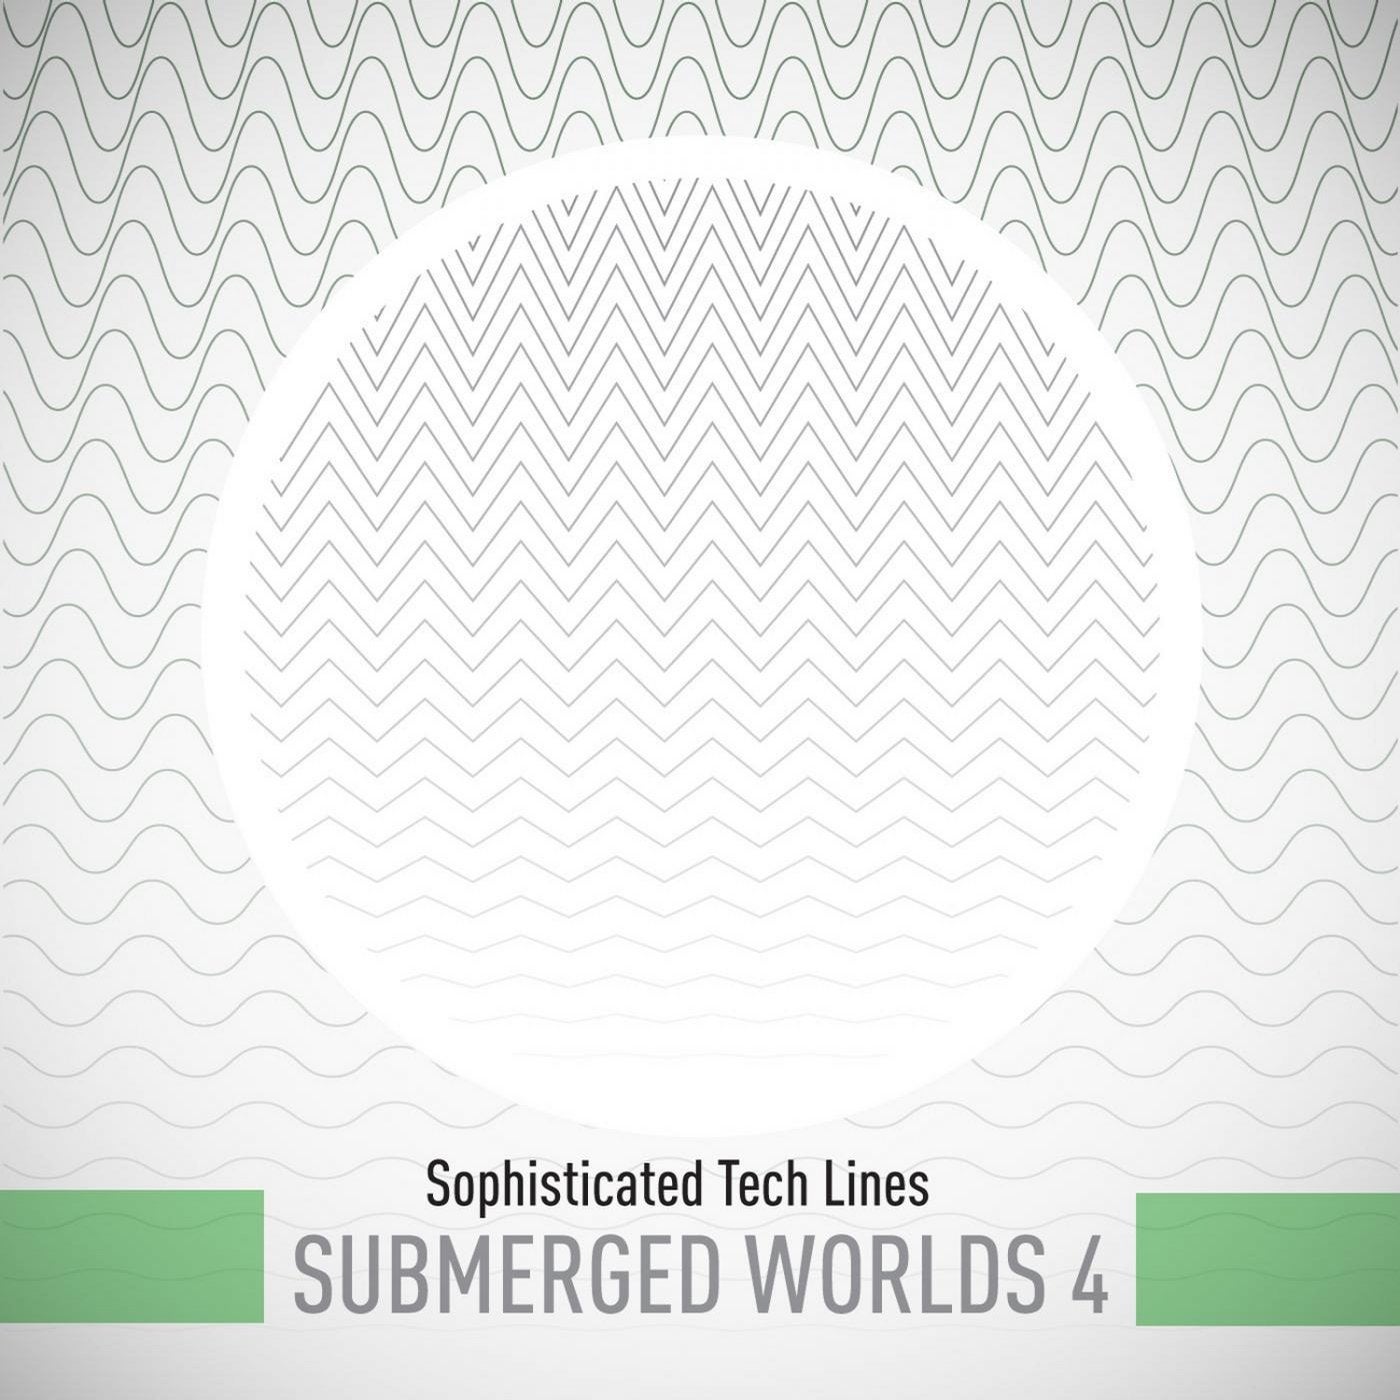 Submerged Worlds 4